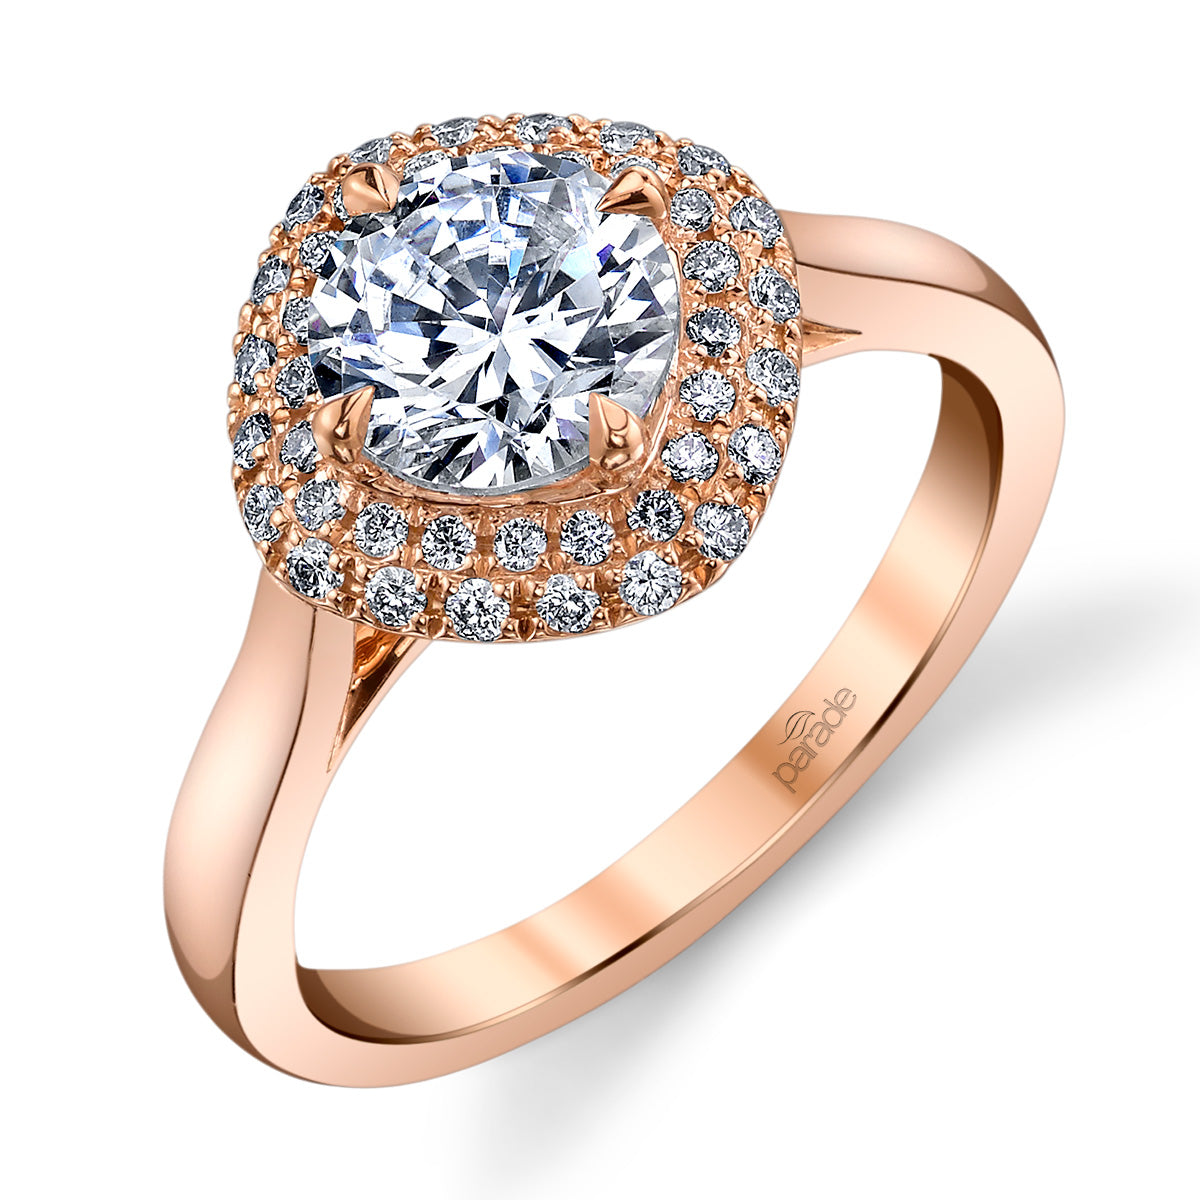 Cushion Double Halo Engagement Ring - Michael E. Minden Diamond Jewelers